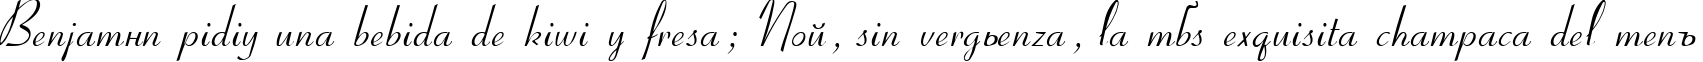 Пример написания шрифтом CyrillicRibbon текста на испанском